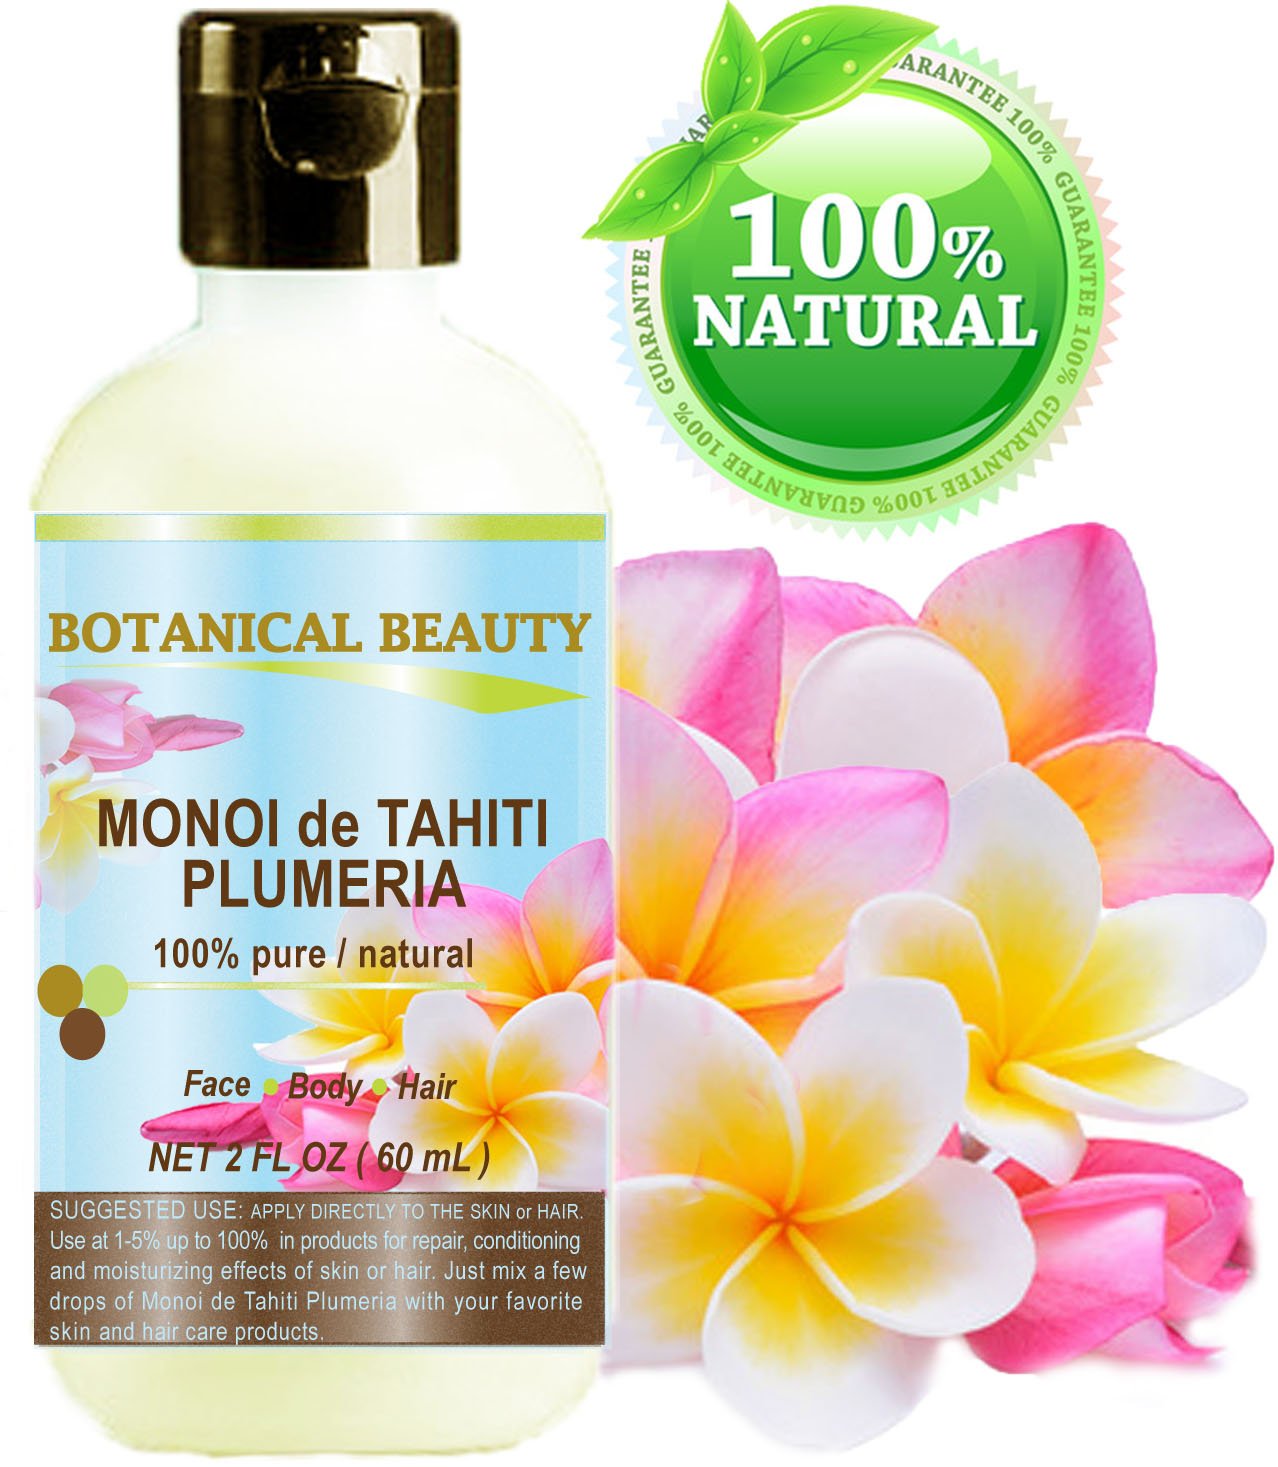 MONOI de TAHITI PLUMERIA OIL 100% Natural / 100% PURE BOTANICALS. 2 Fl.oz.- 60 ml. For Skin, Hair and Nail Care.